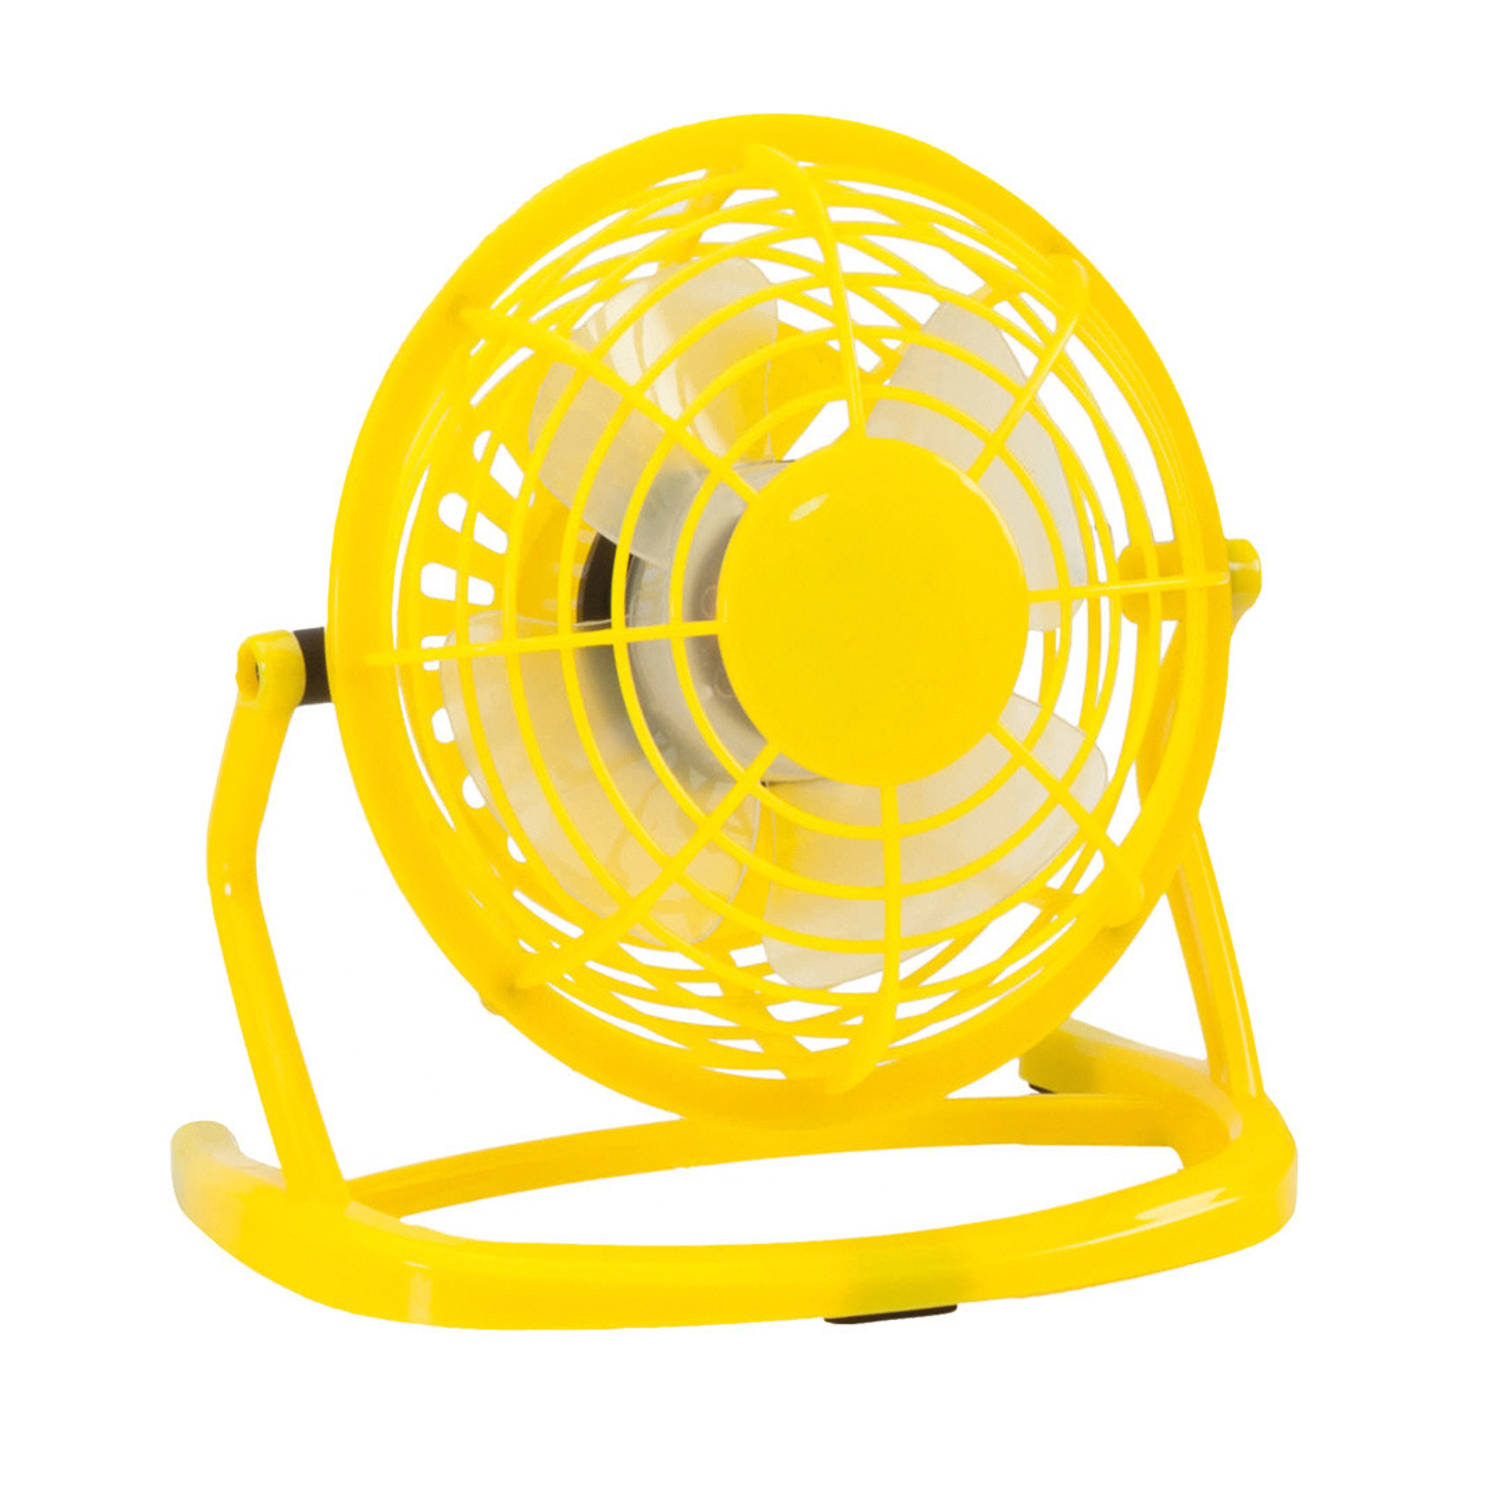 Kleine USB ventilator  bureau ventilator geel kunststof 15 x 9 cm Ventilatoren